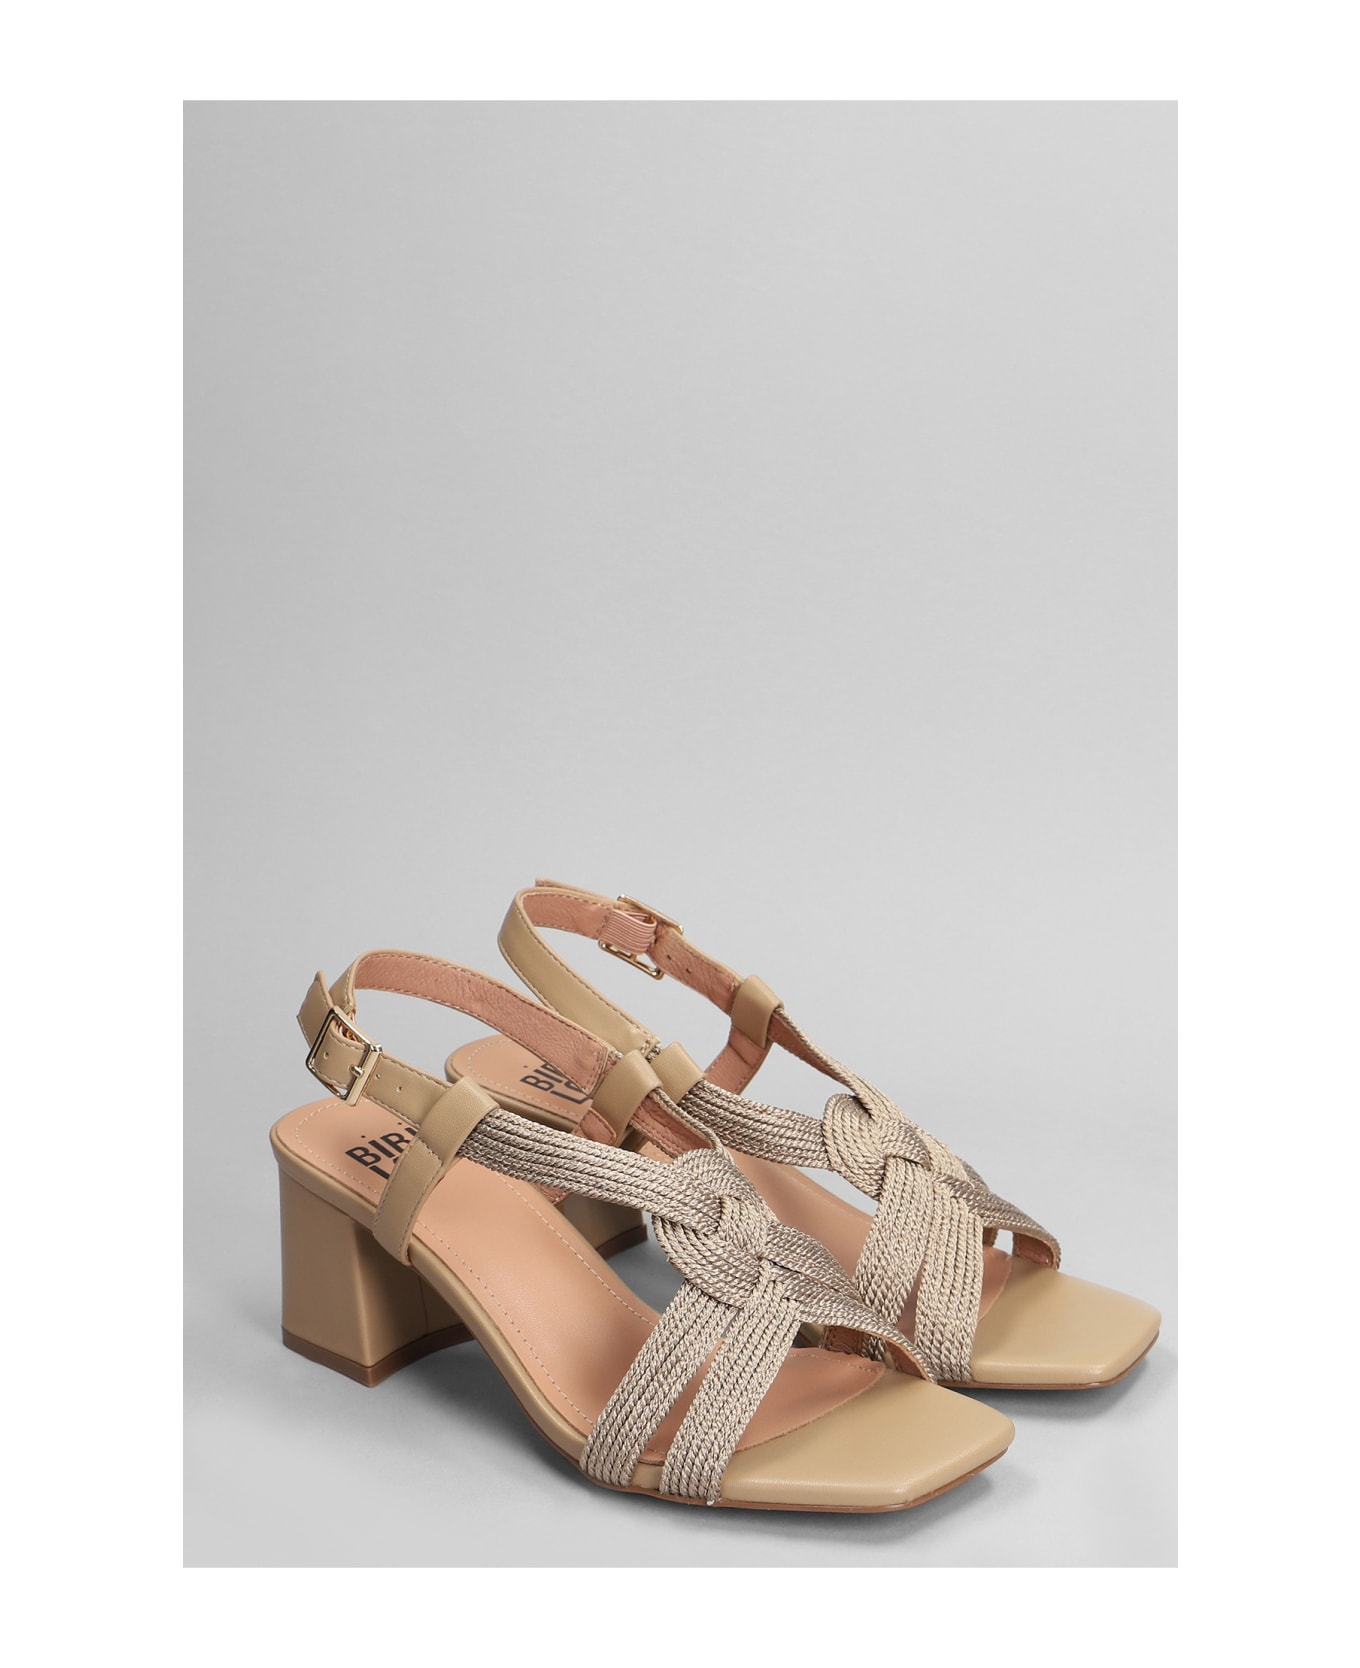 Bibi Lou Setsuko Sandals In Camel Leather - Camel